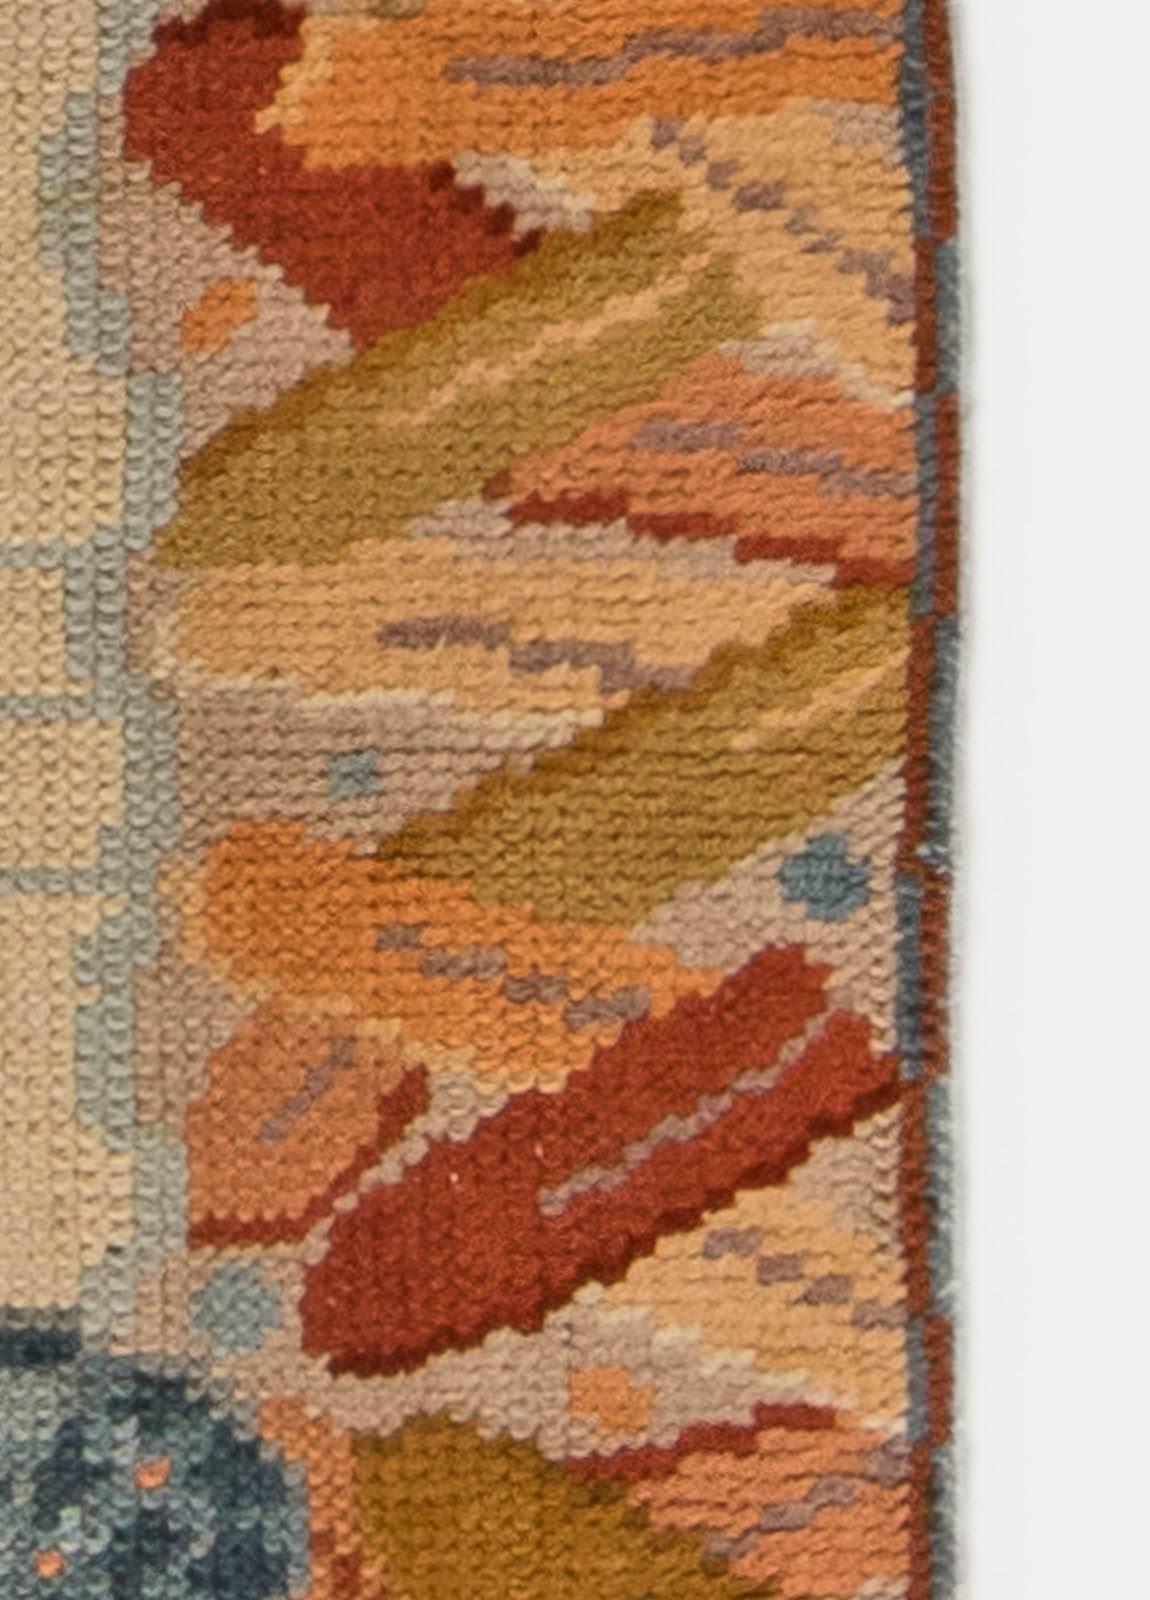 Hand-Woven Doris Leslie Blau Collection Mid-20th century Art Deco Handmade Wool Rug For Sale